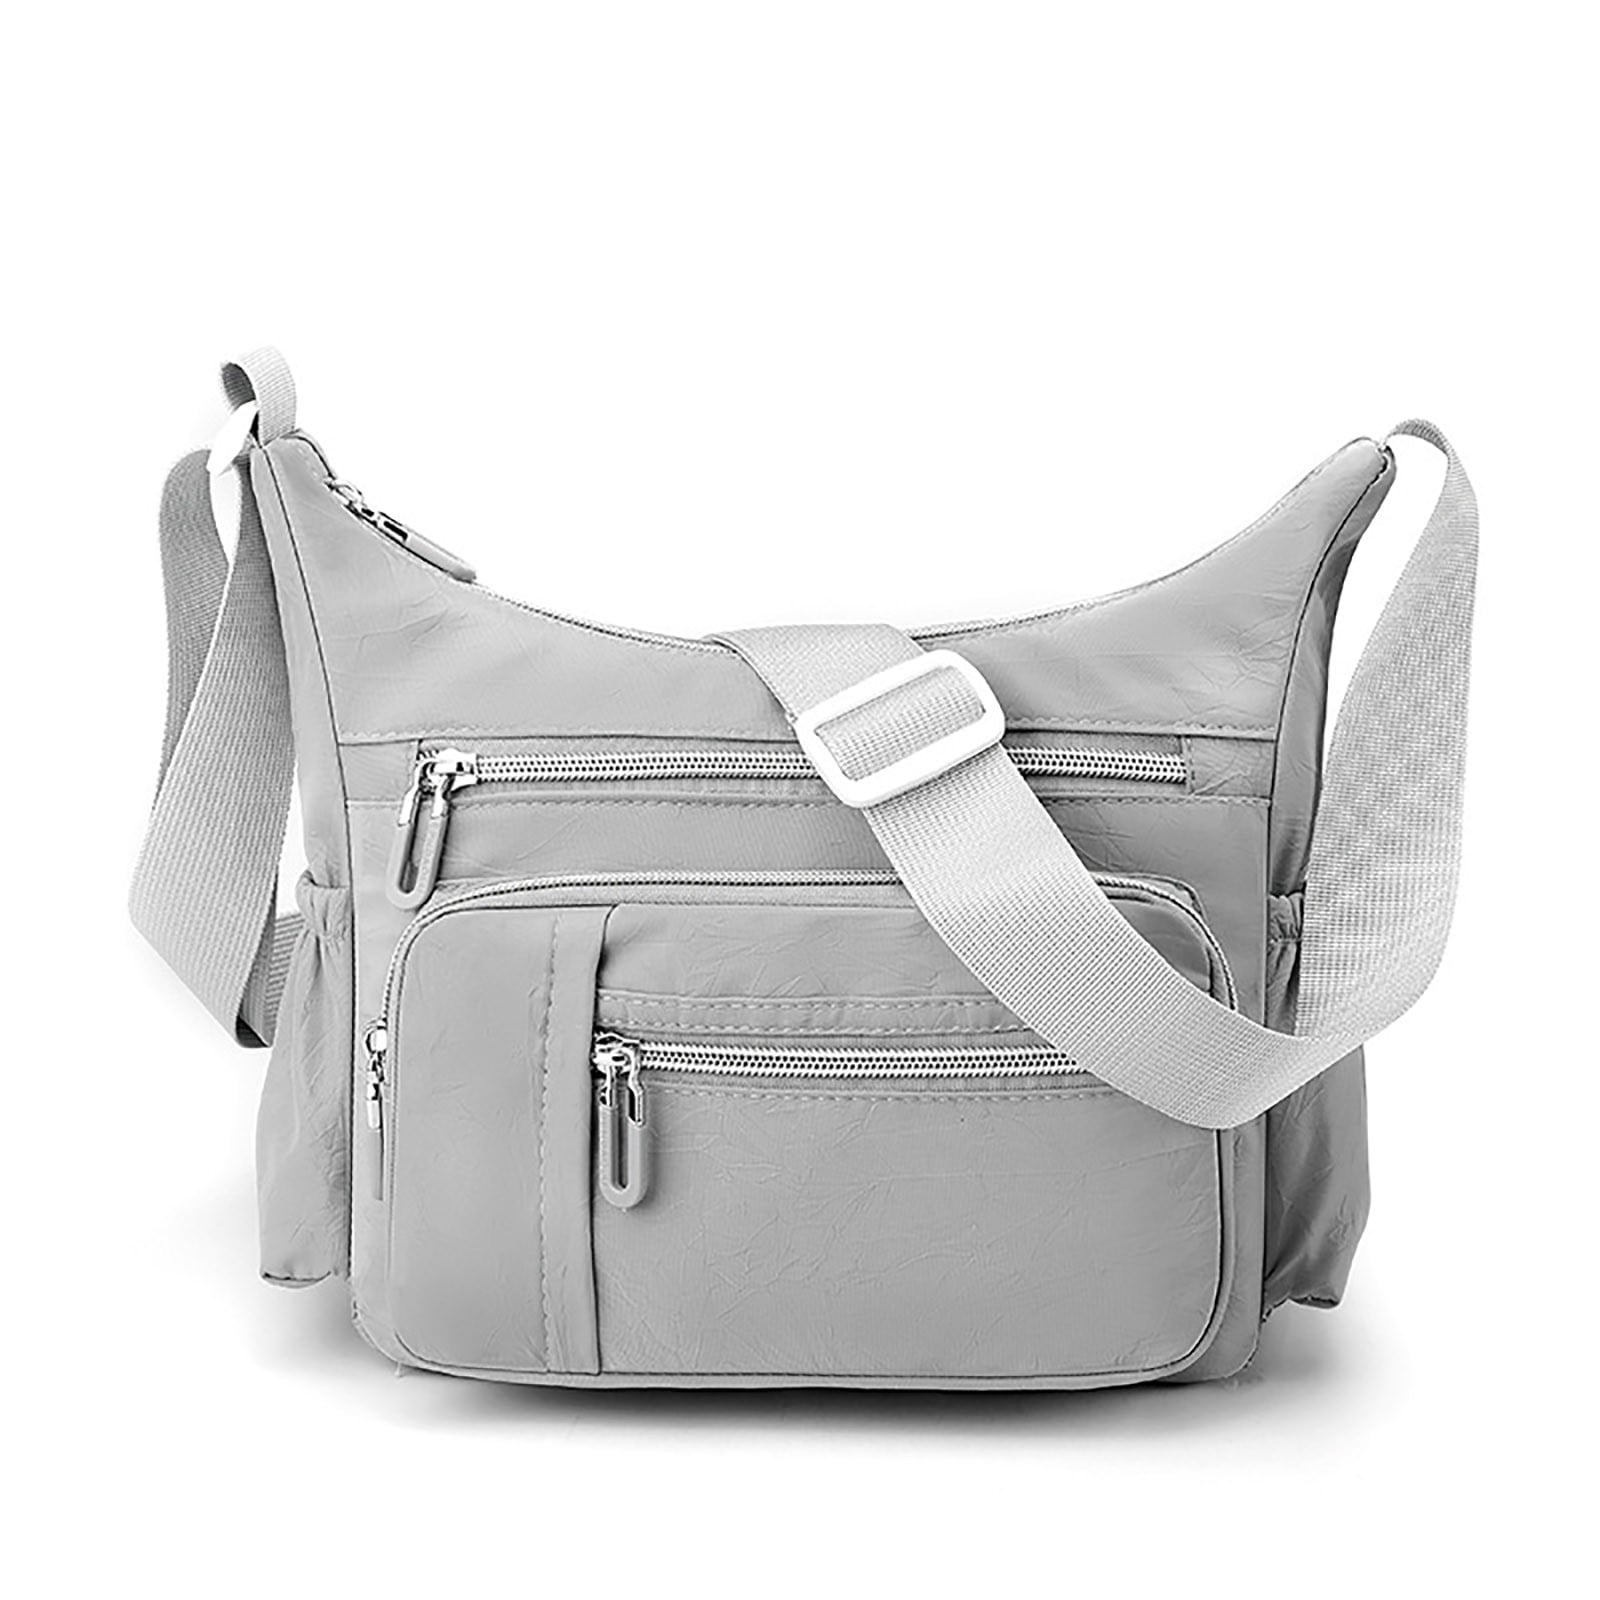 COACH Beige Smooth Leather Satchel Handbag/ Shoulder bag - Women's handbags